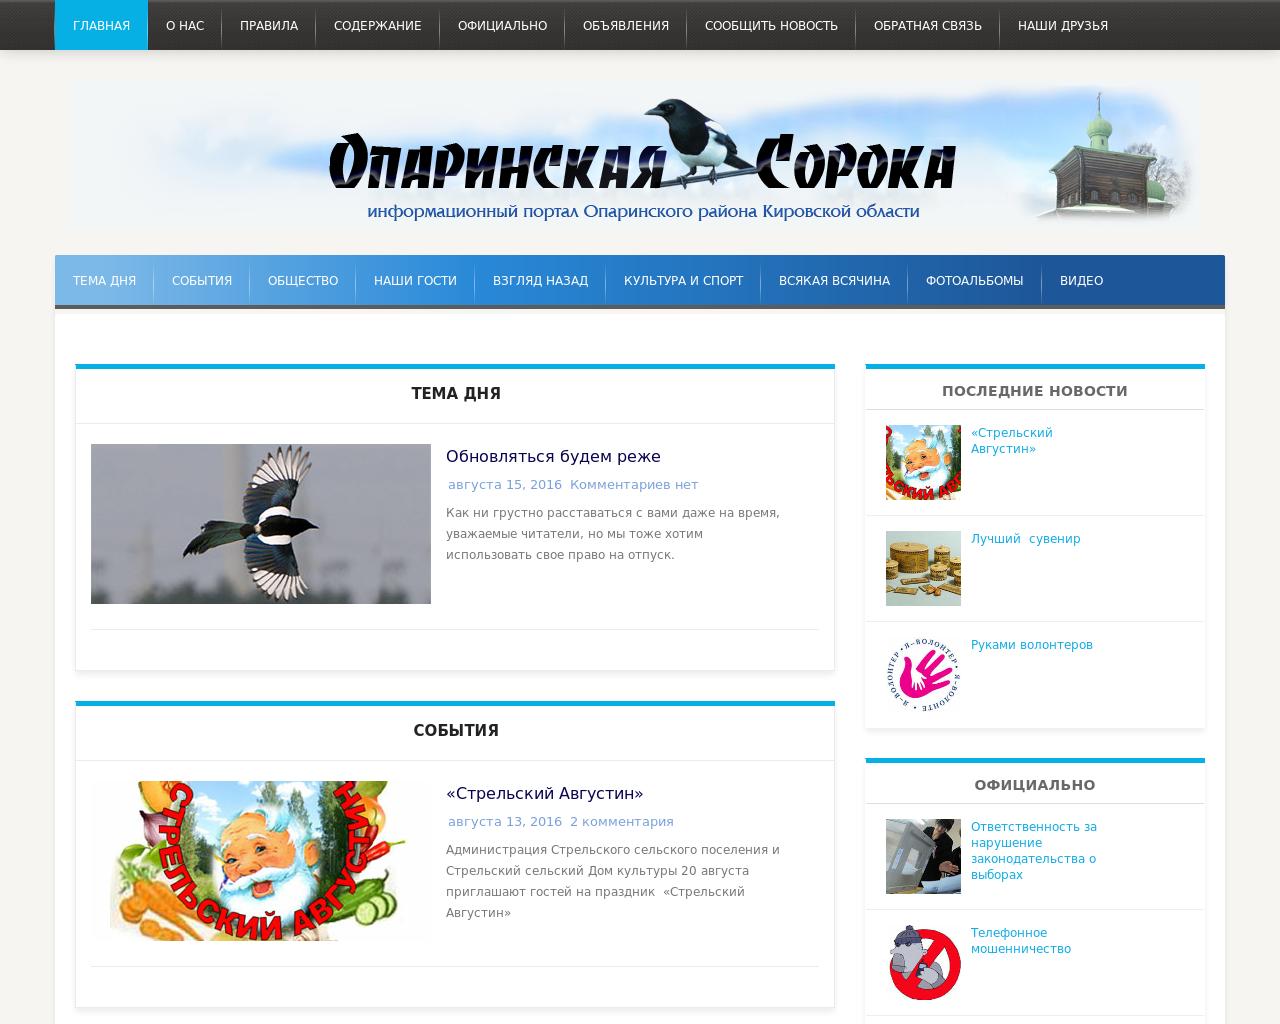 Изображение сайта coppoka.ru в разрешении 1280x1024